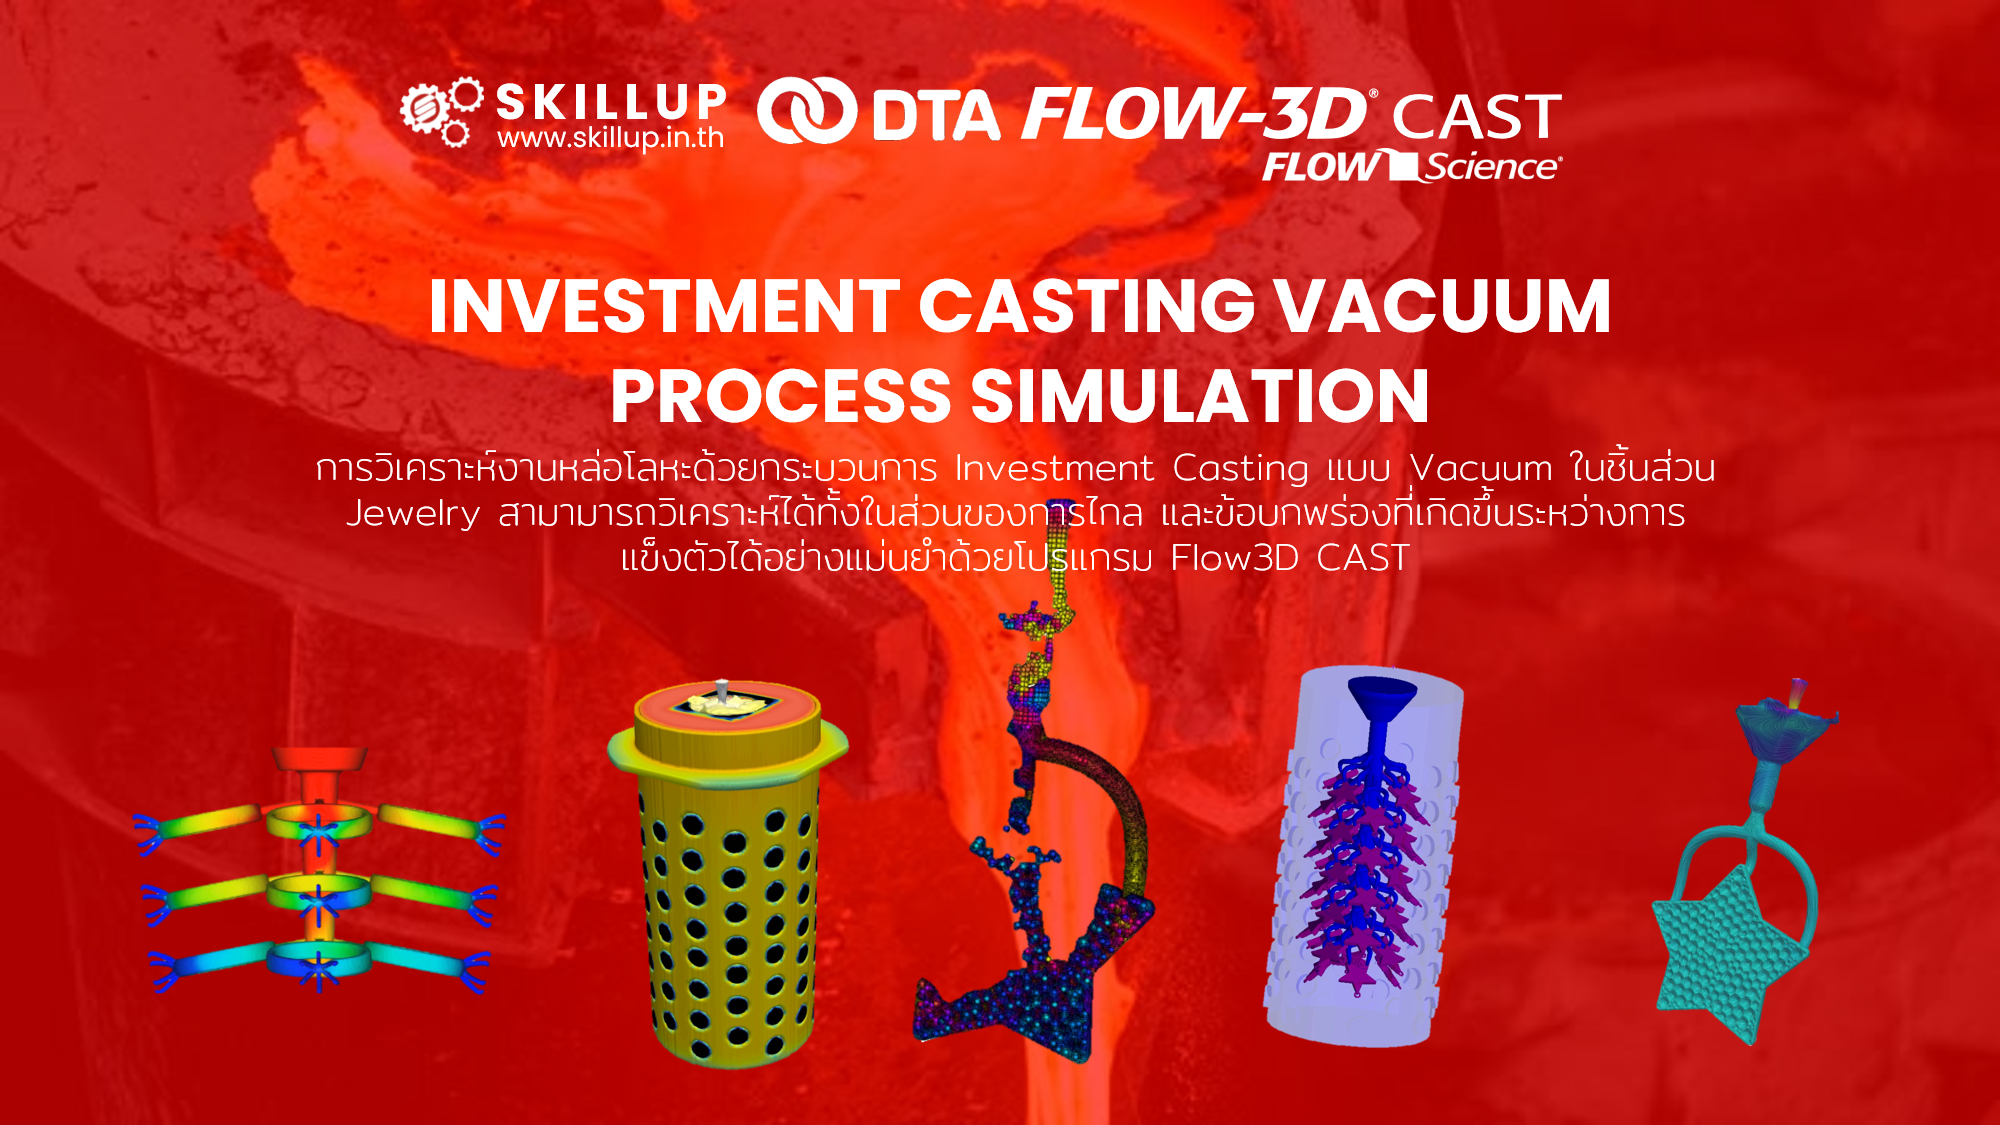 FLOW-3D CAST - Investment Casting Vacuum Process Simulation